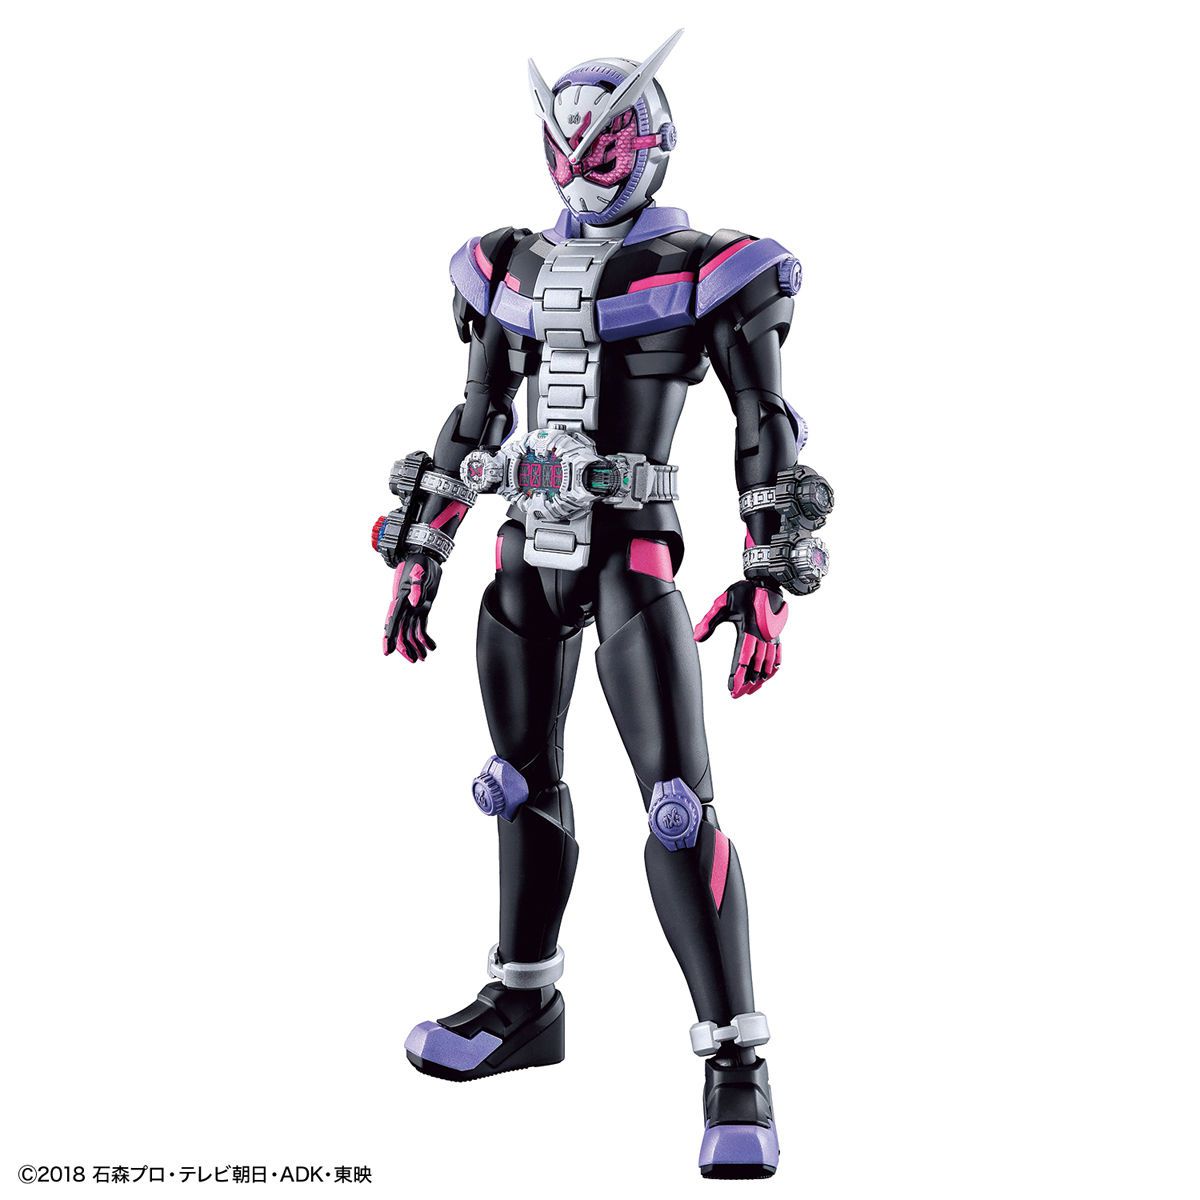 Kamen Rider Zi-O Figure-rise Standard - Kamen Rider Bandai | Glacier Hobbies